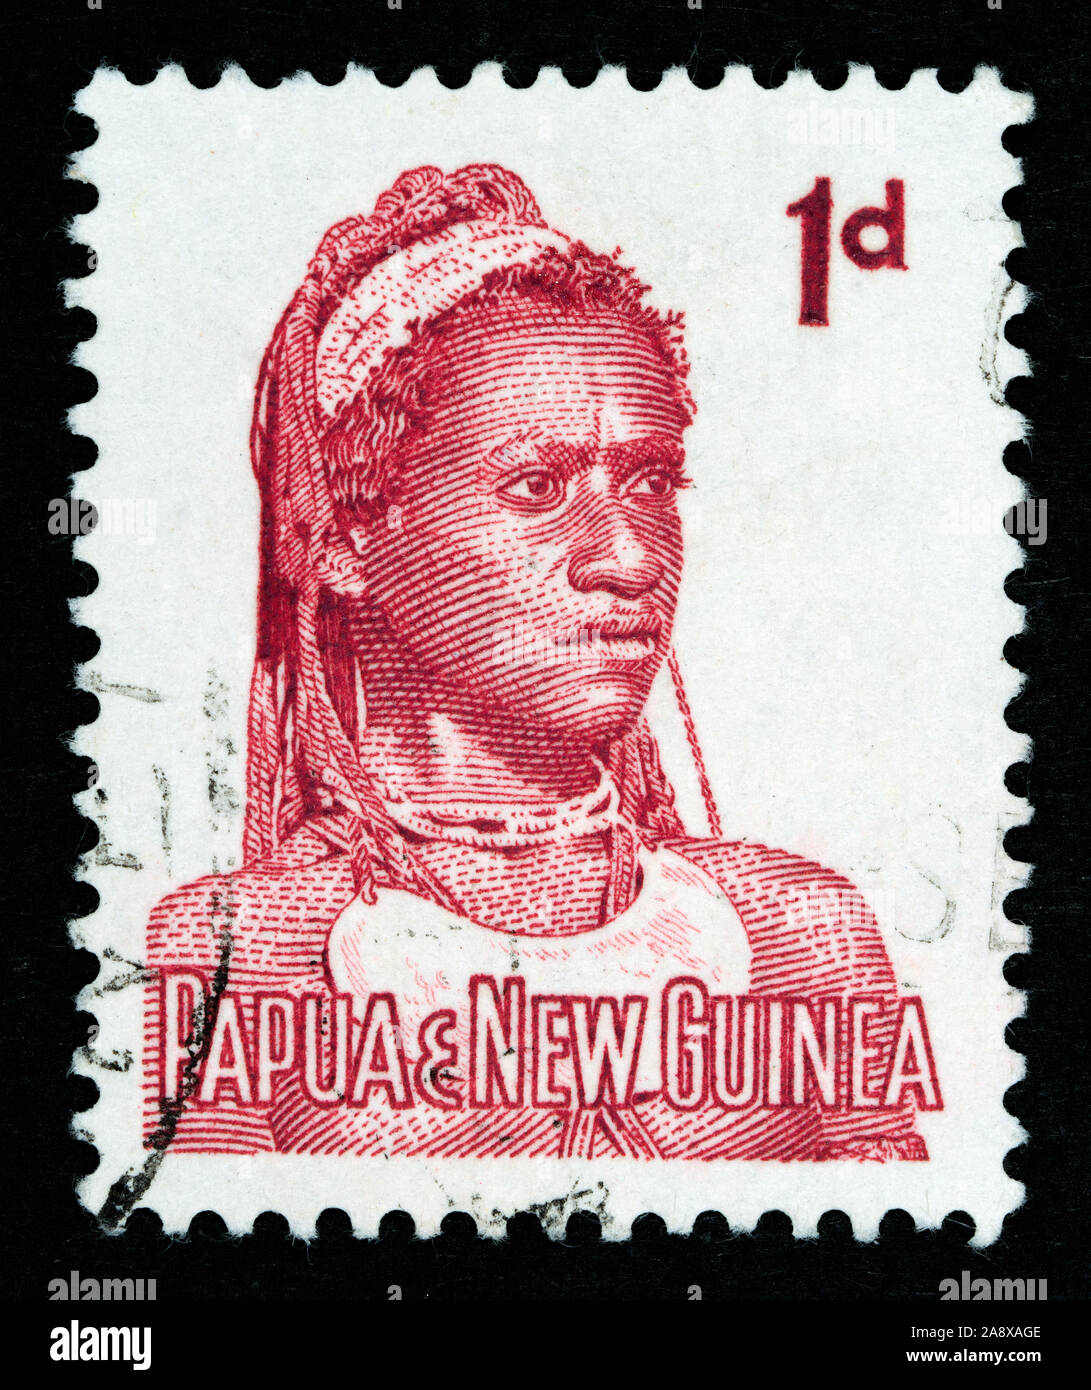 Papua-neuguinea Briefmarke Stockfoto